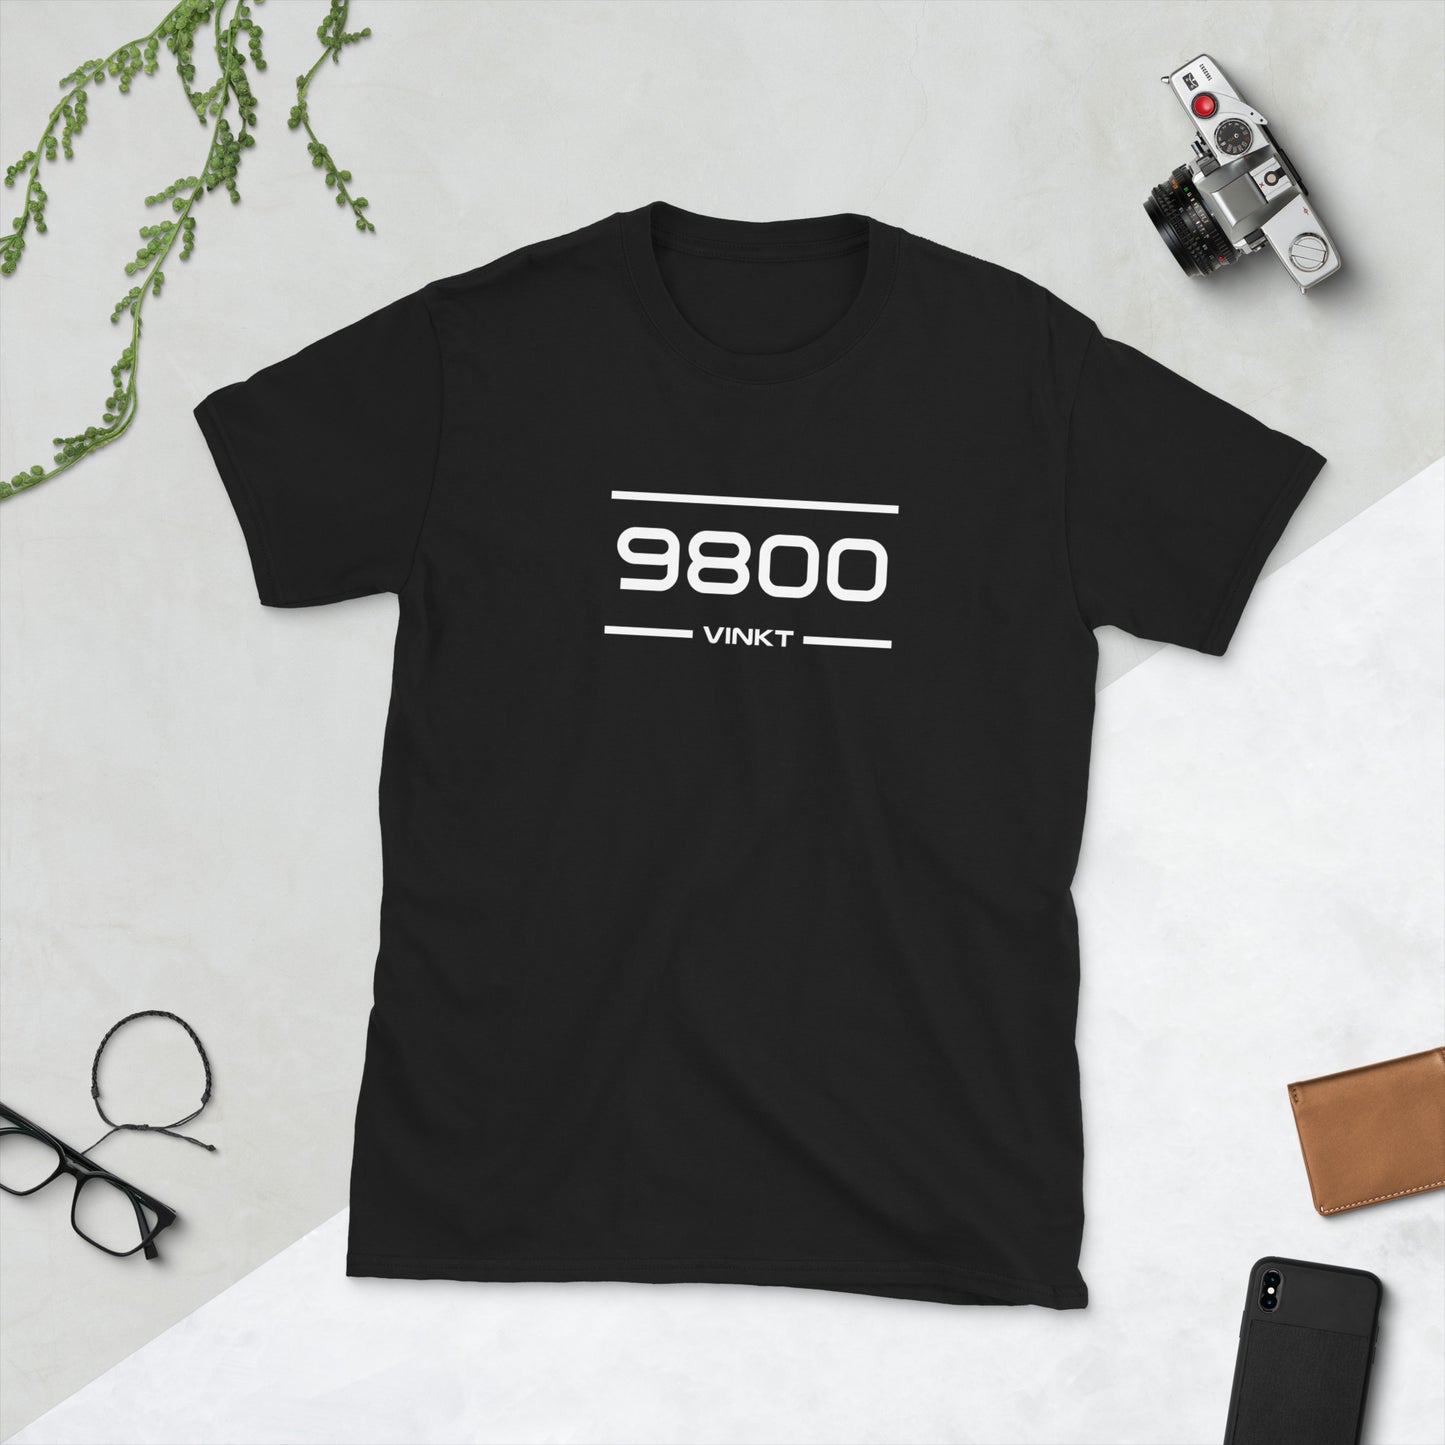 Tshirt - 9800 - Vinkt